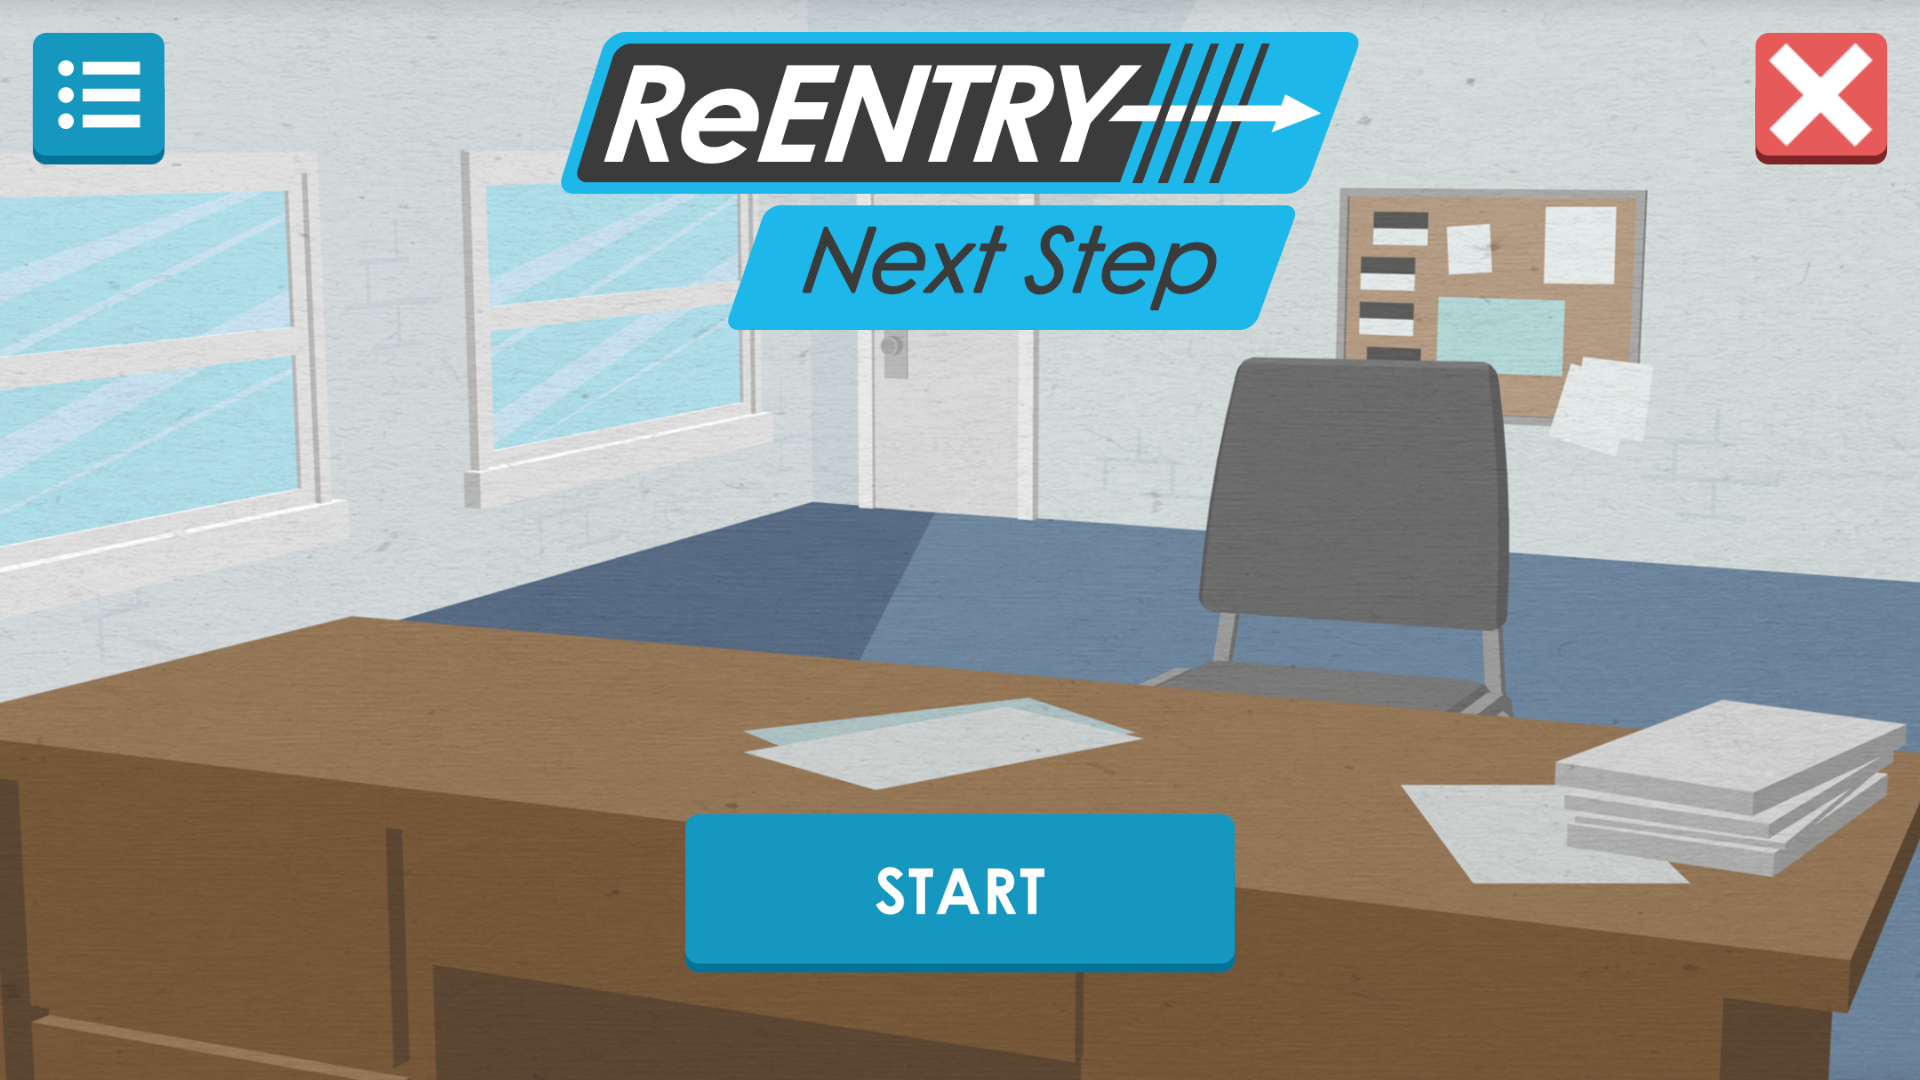 ReEntry: Next Step